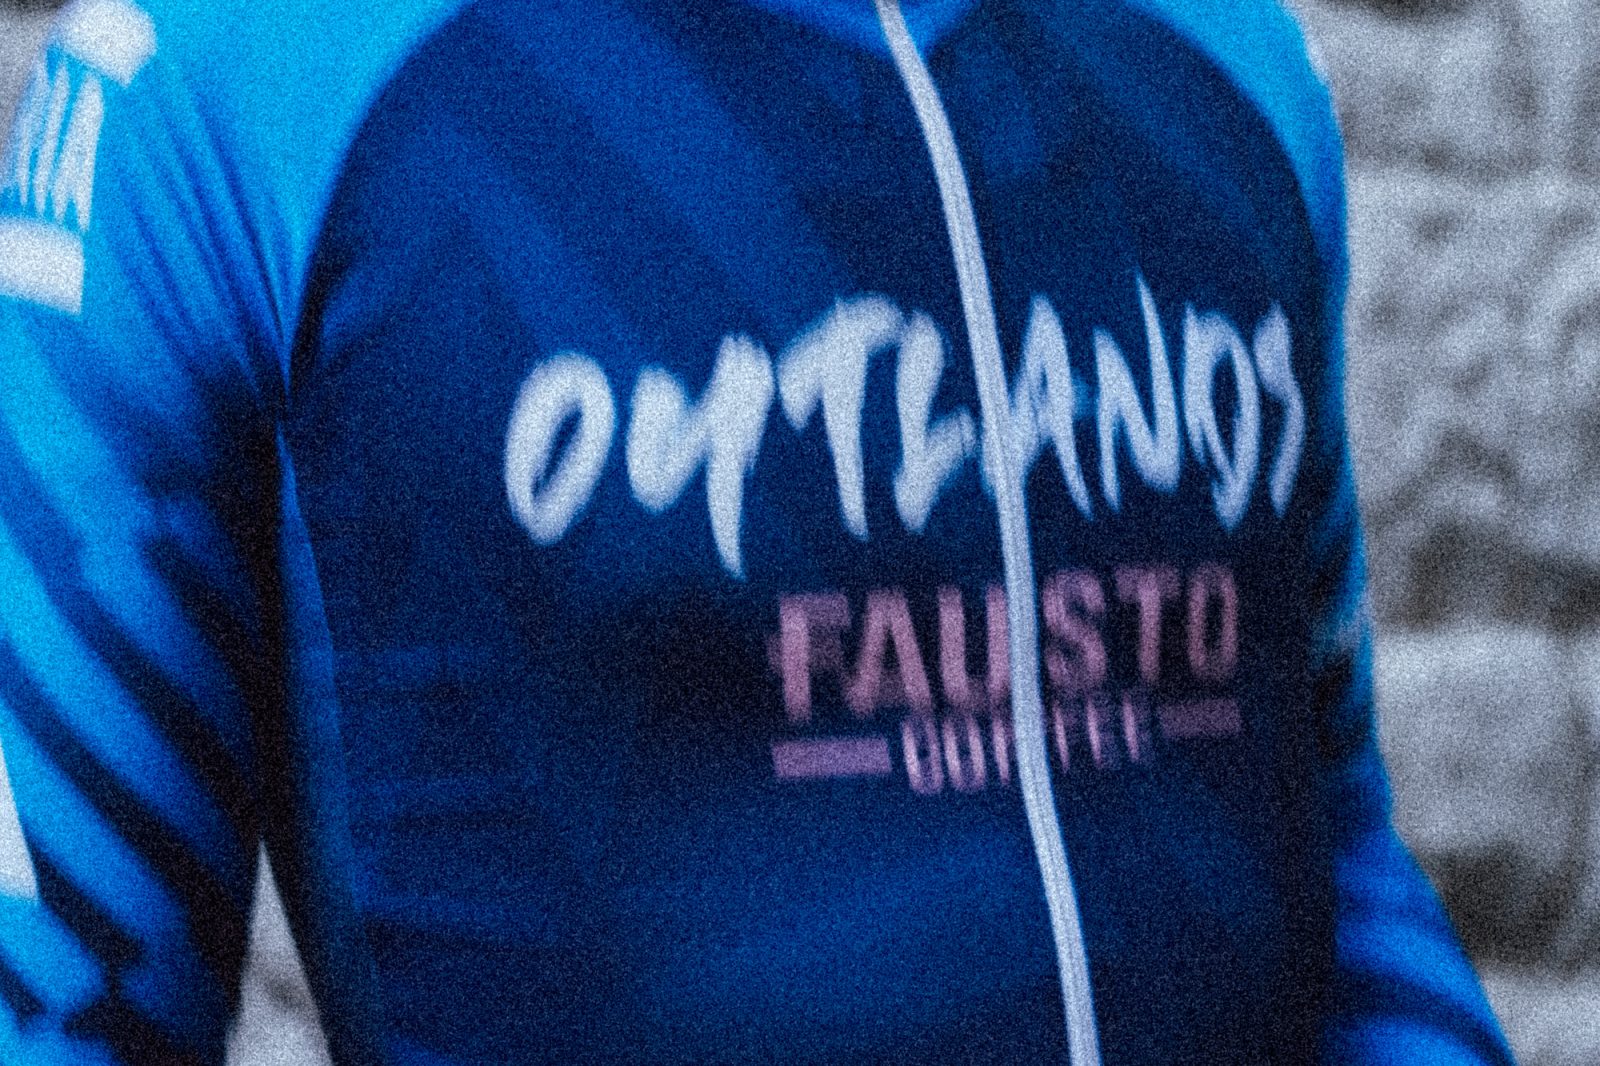 North X Outlands Fausto Cycling Partnership